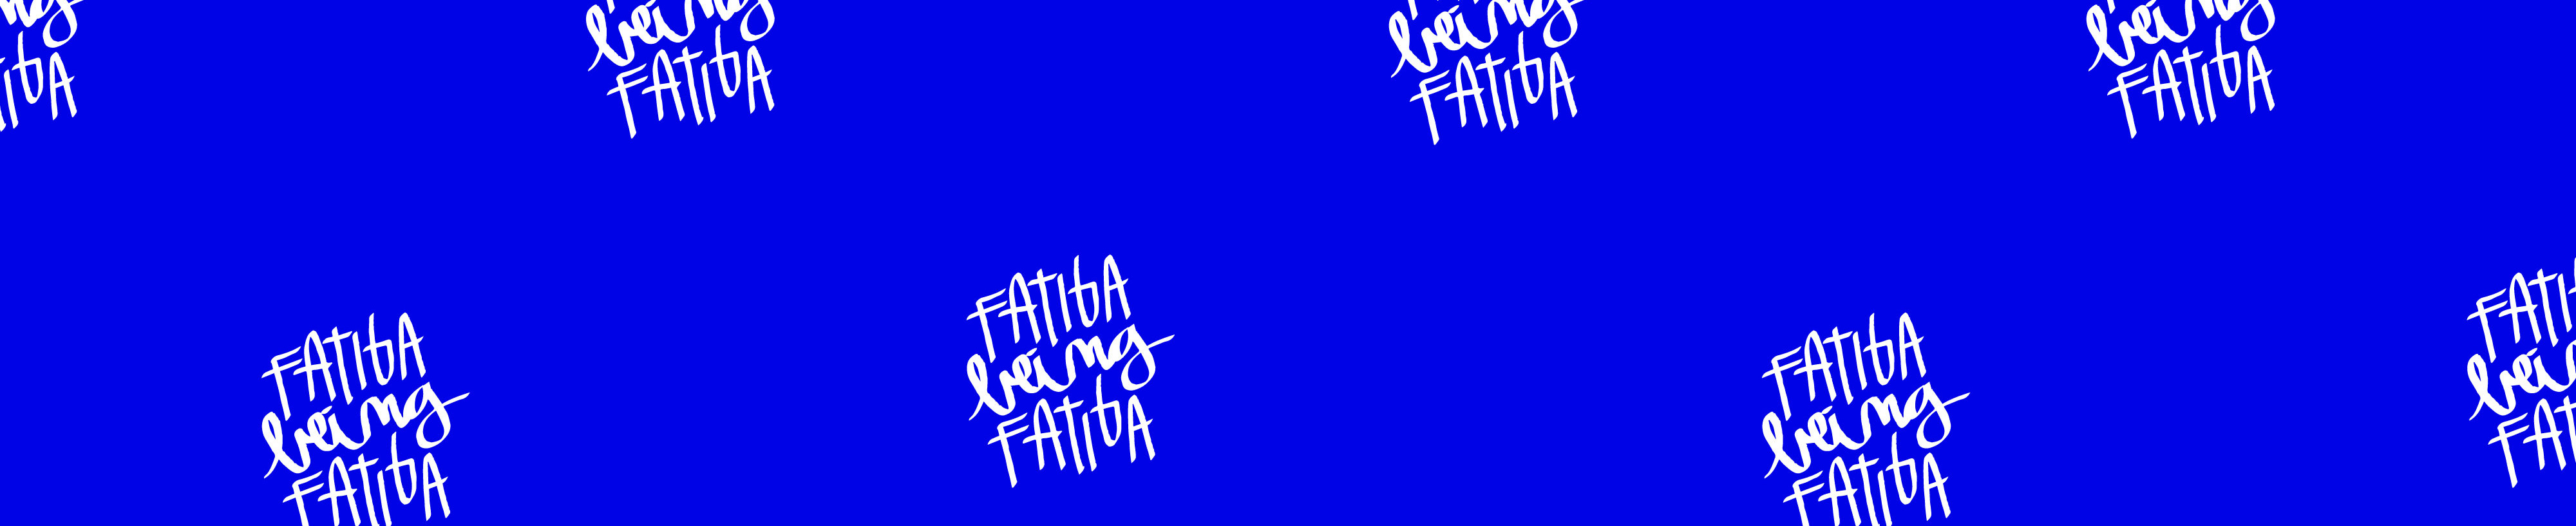 Fátima Igarreta's profile banner